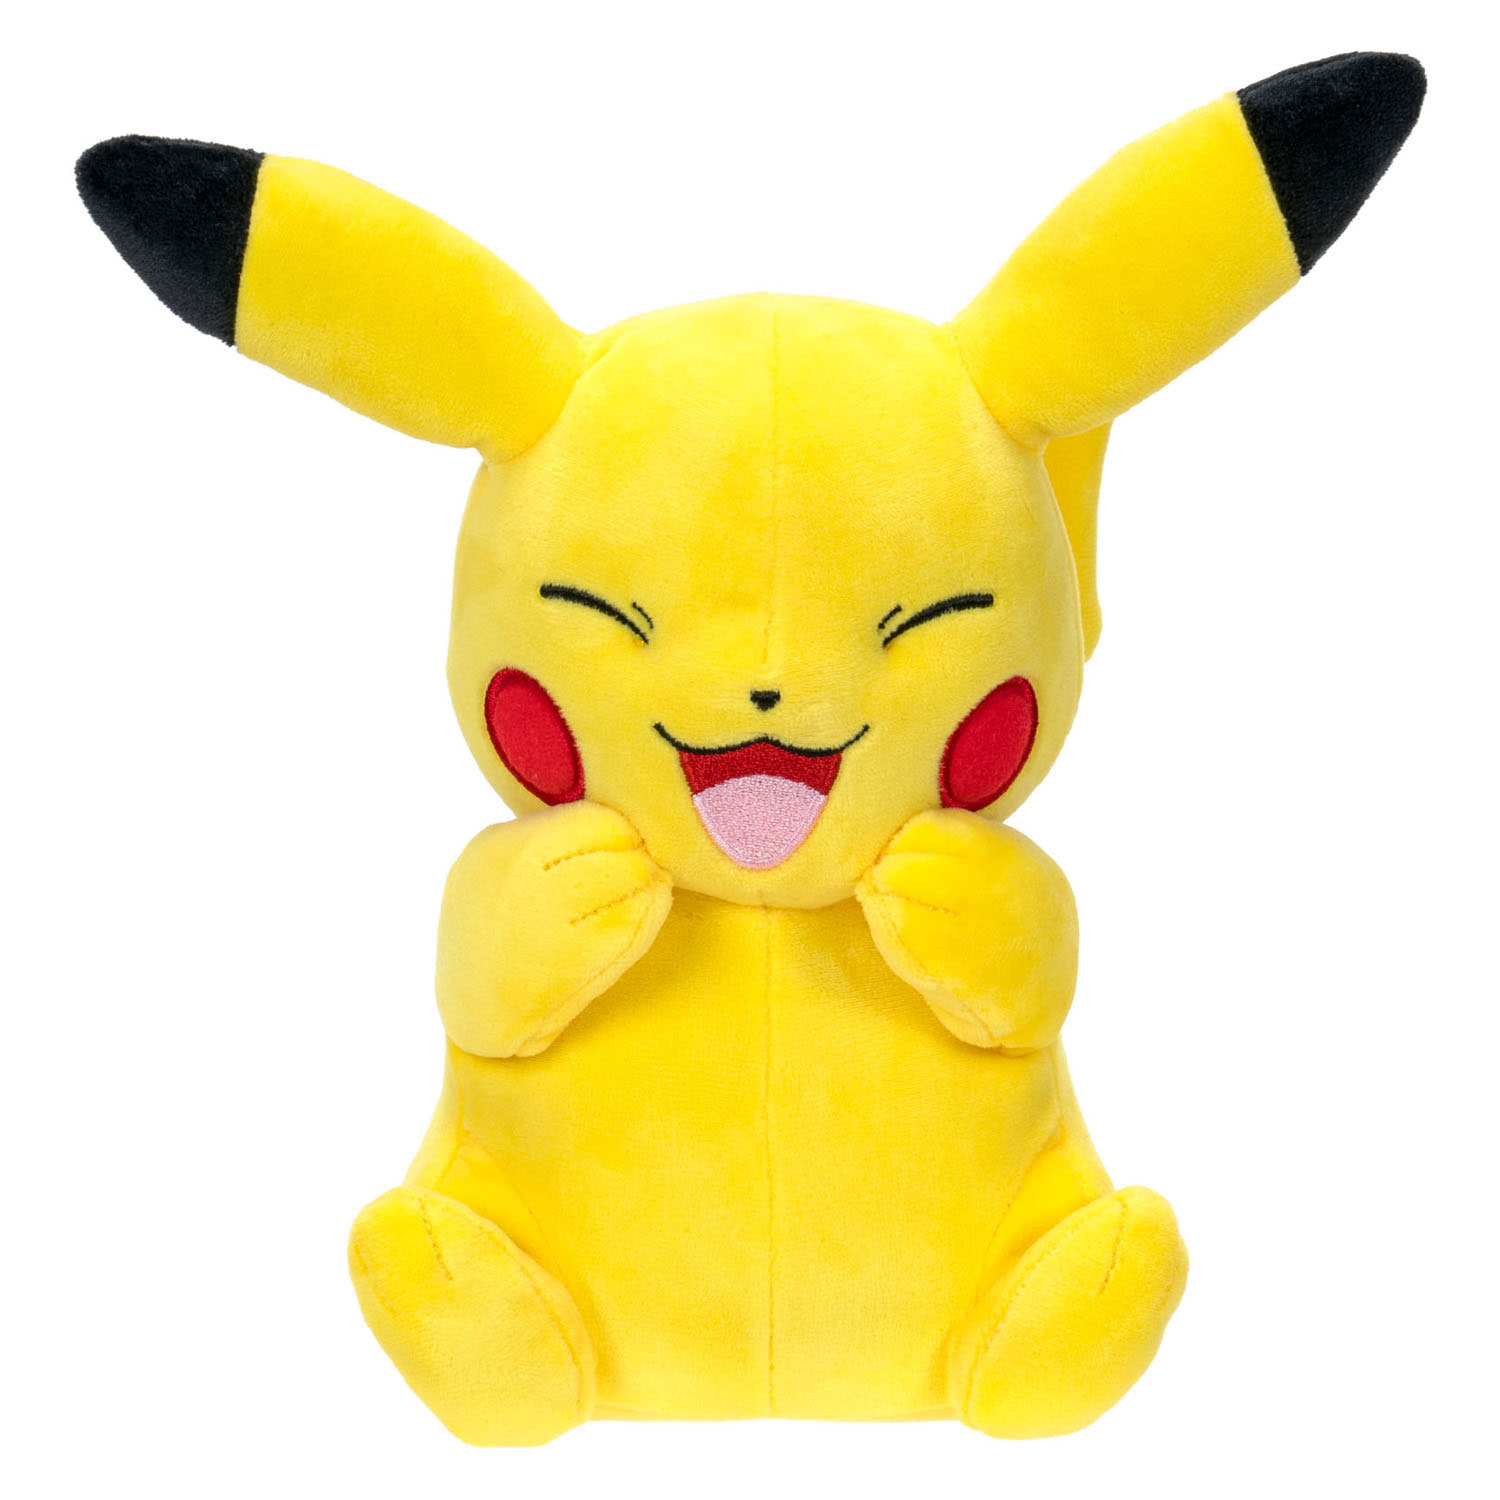 Peluche Pokémon - Pikachu, 20 cm